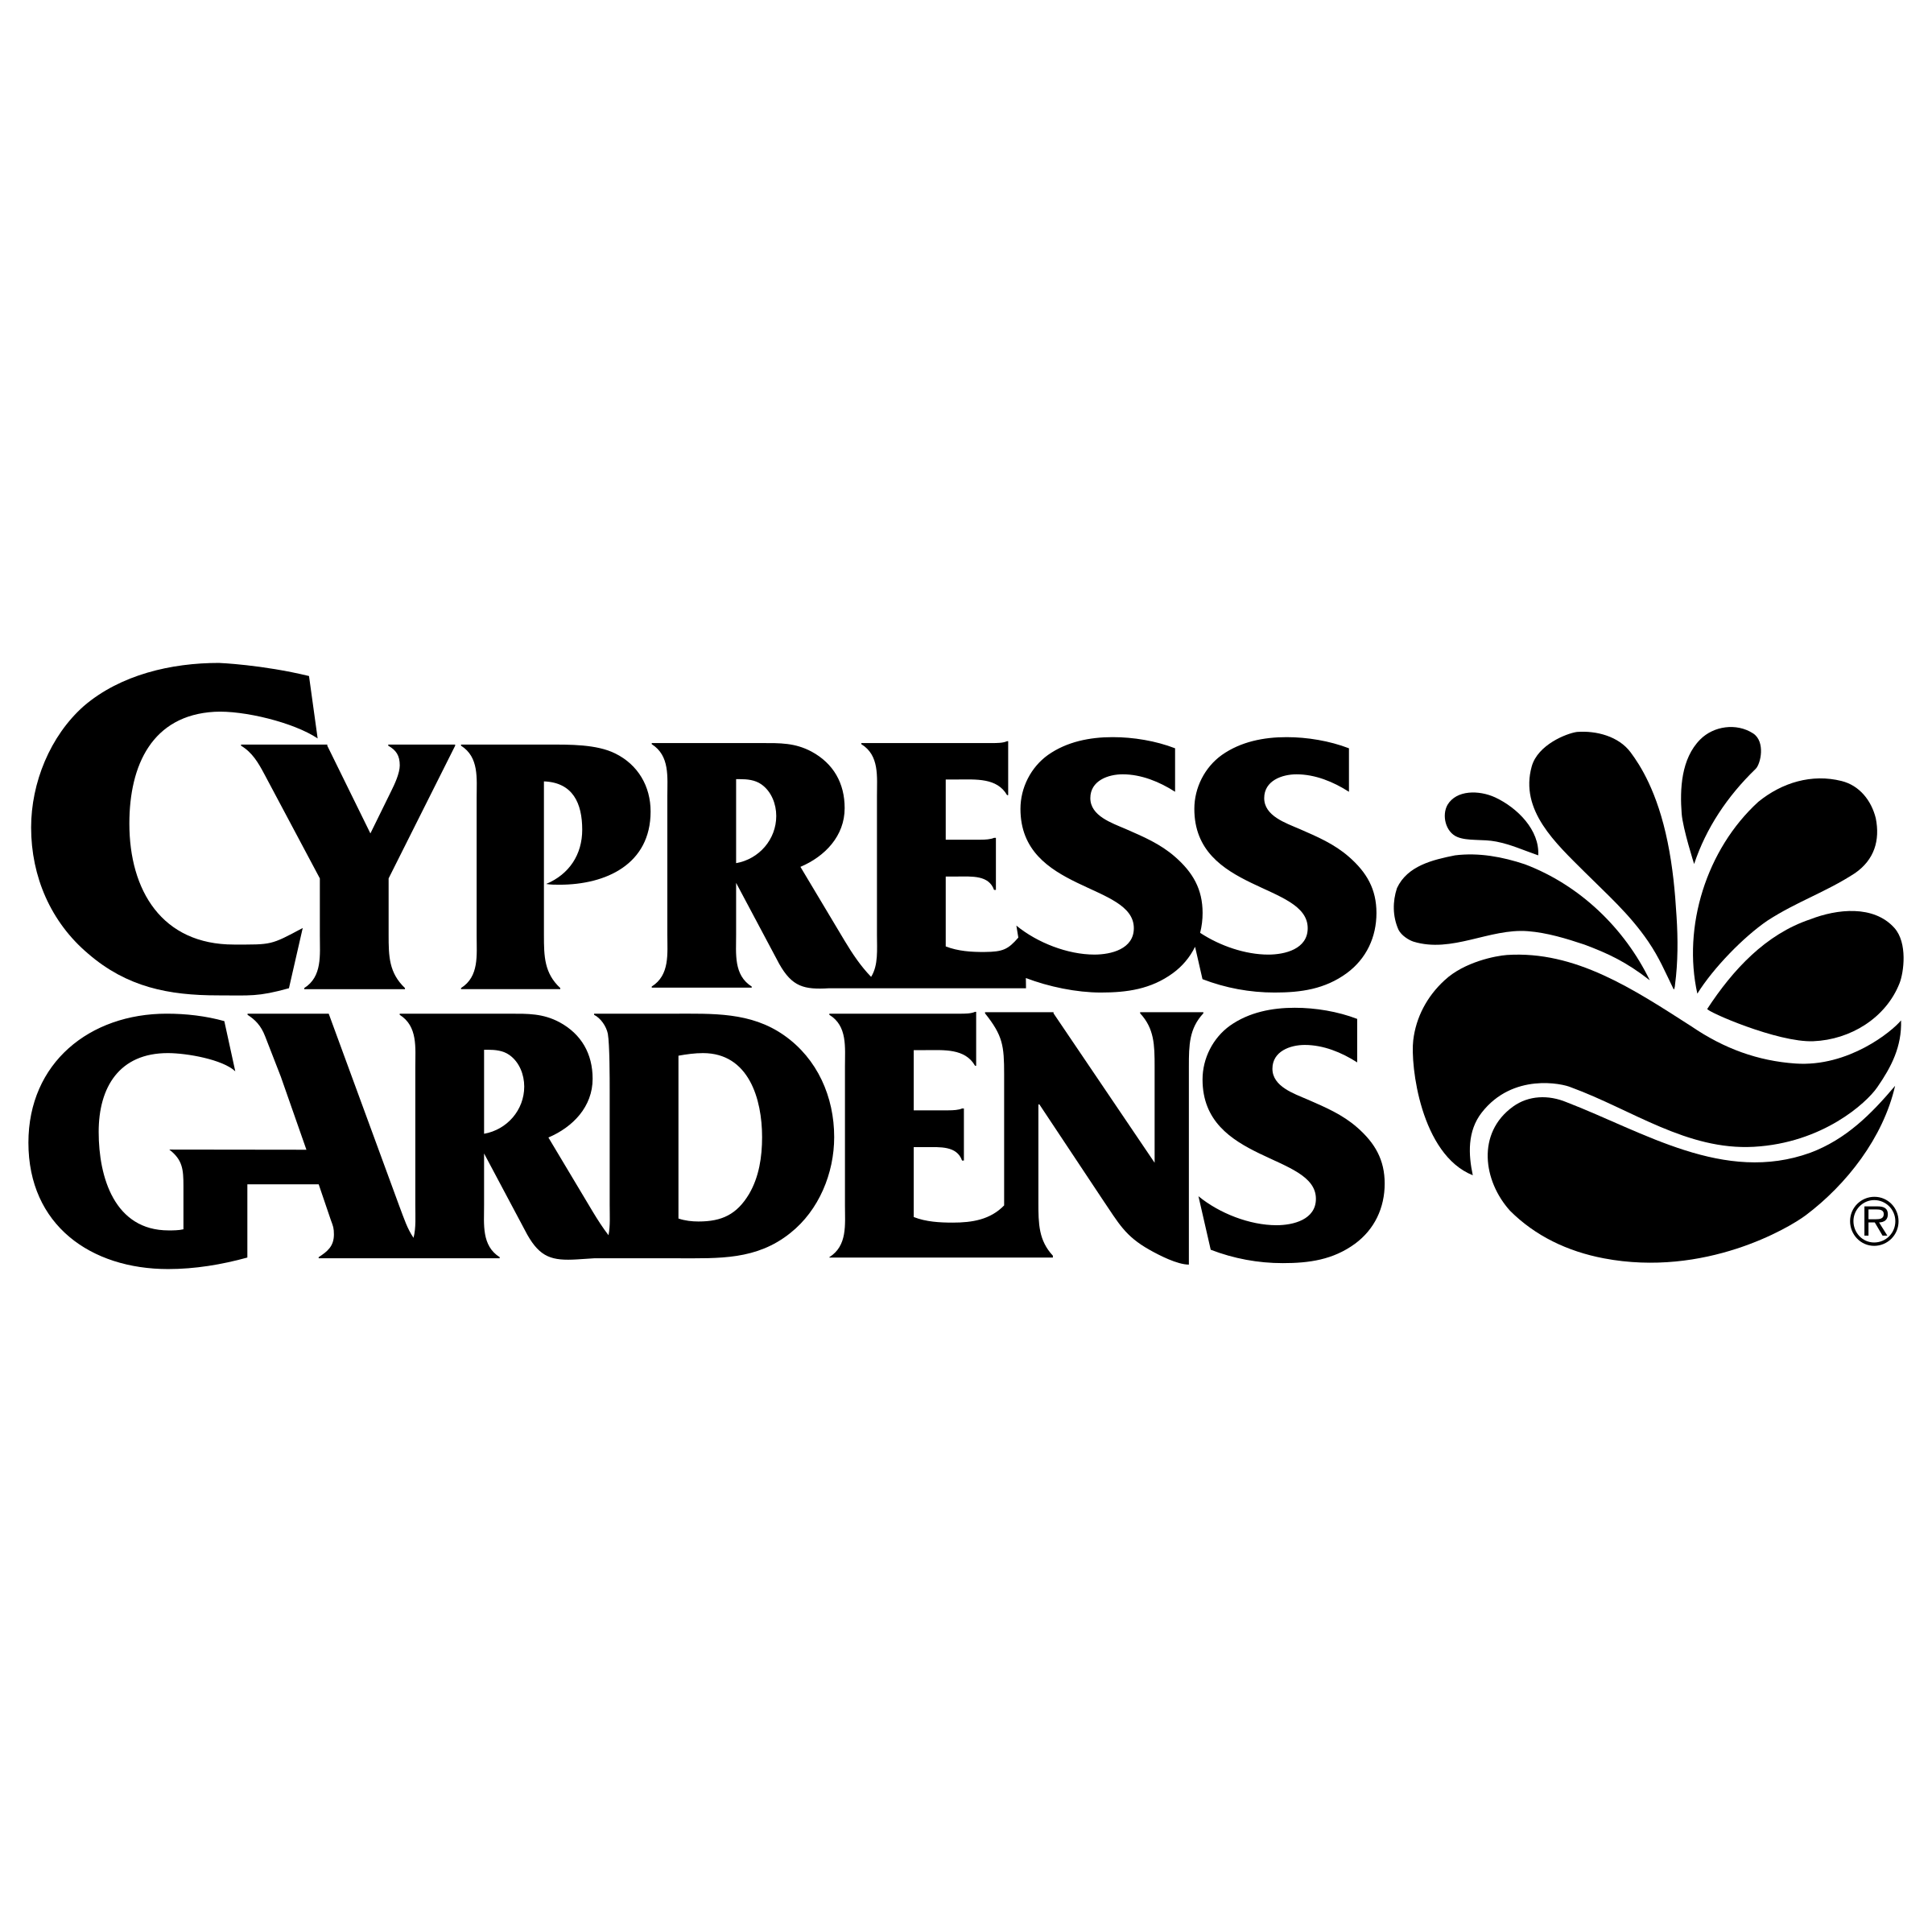 Cypress Logo - Cypress Gardens Logo PNG Transparent & SVG Vector - Freebie Supply